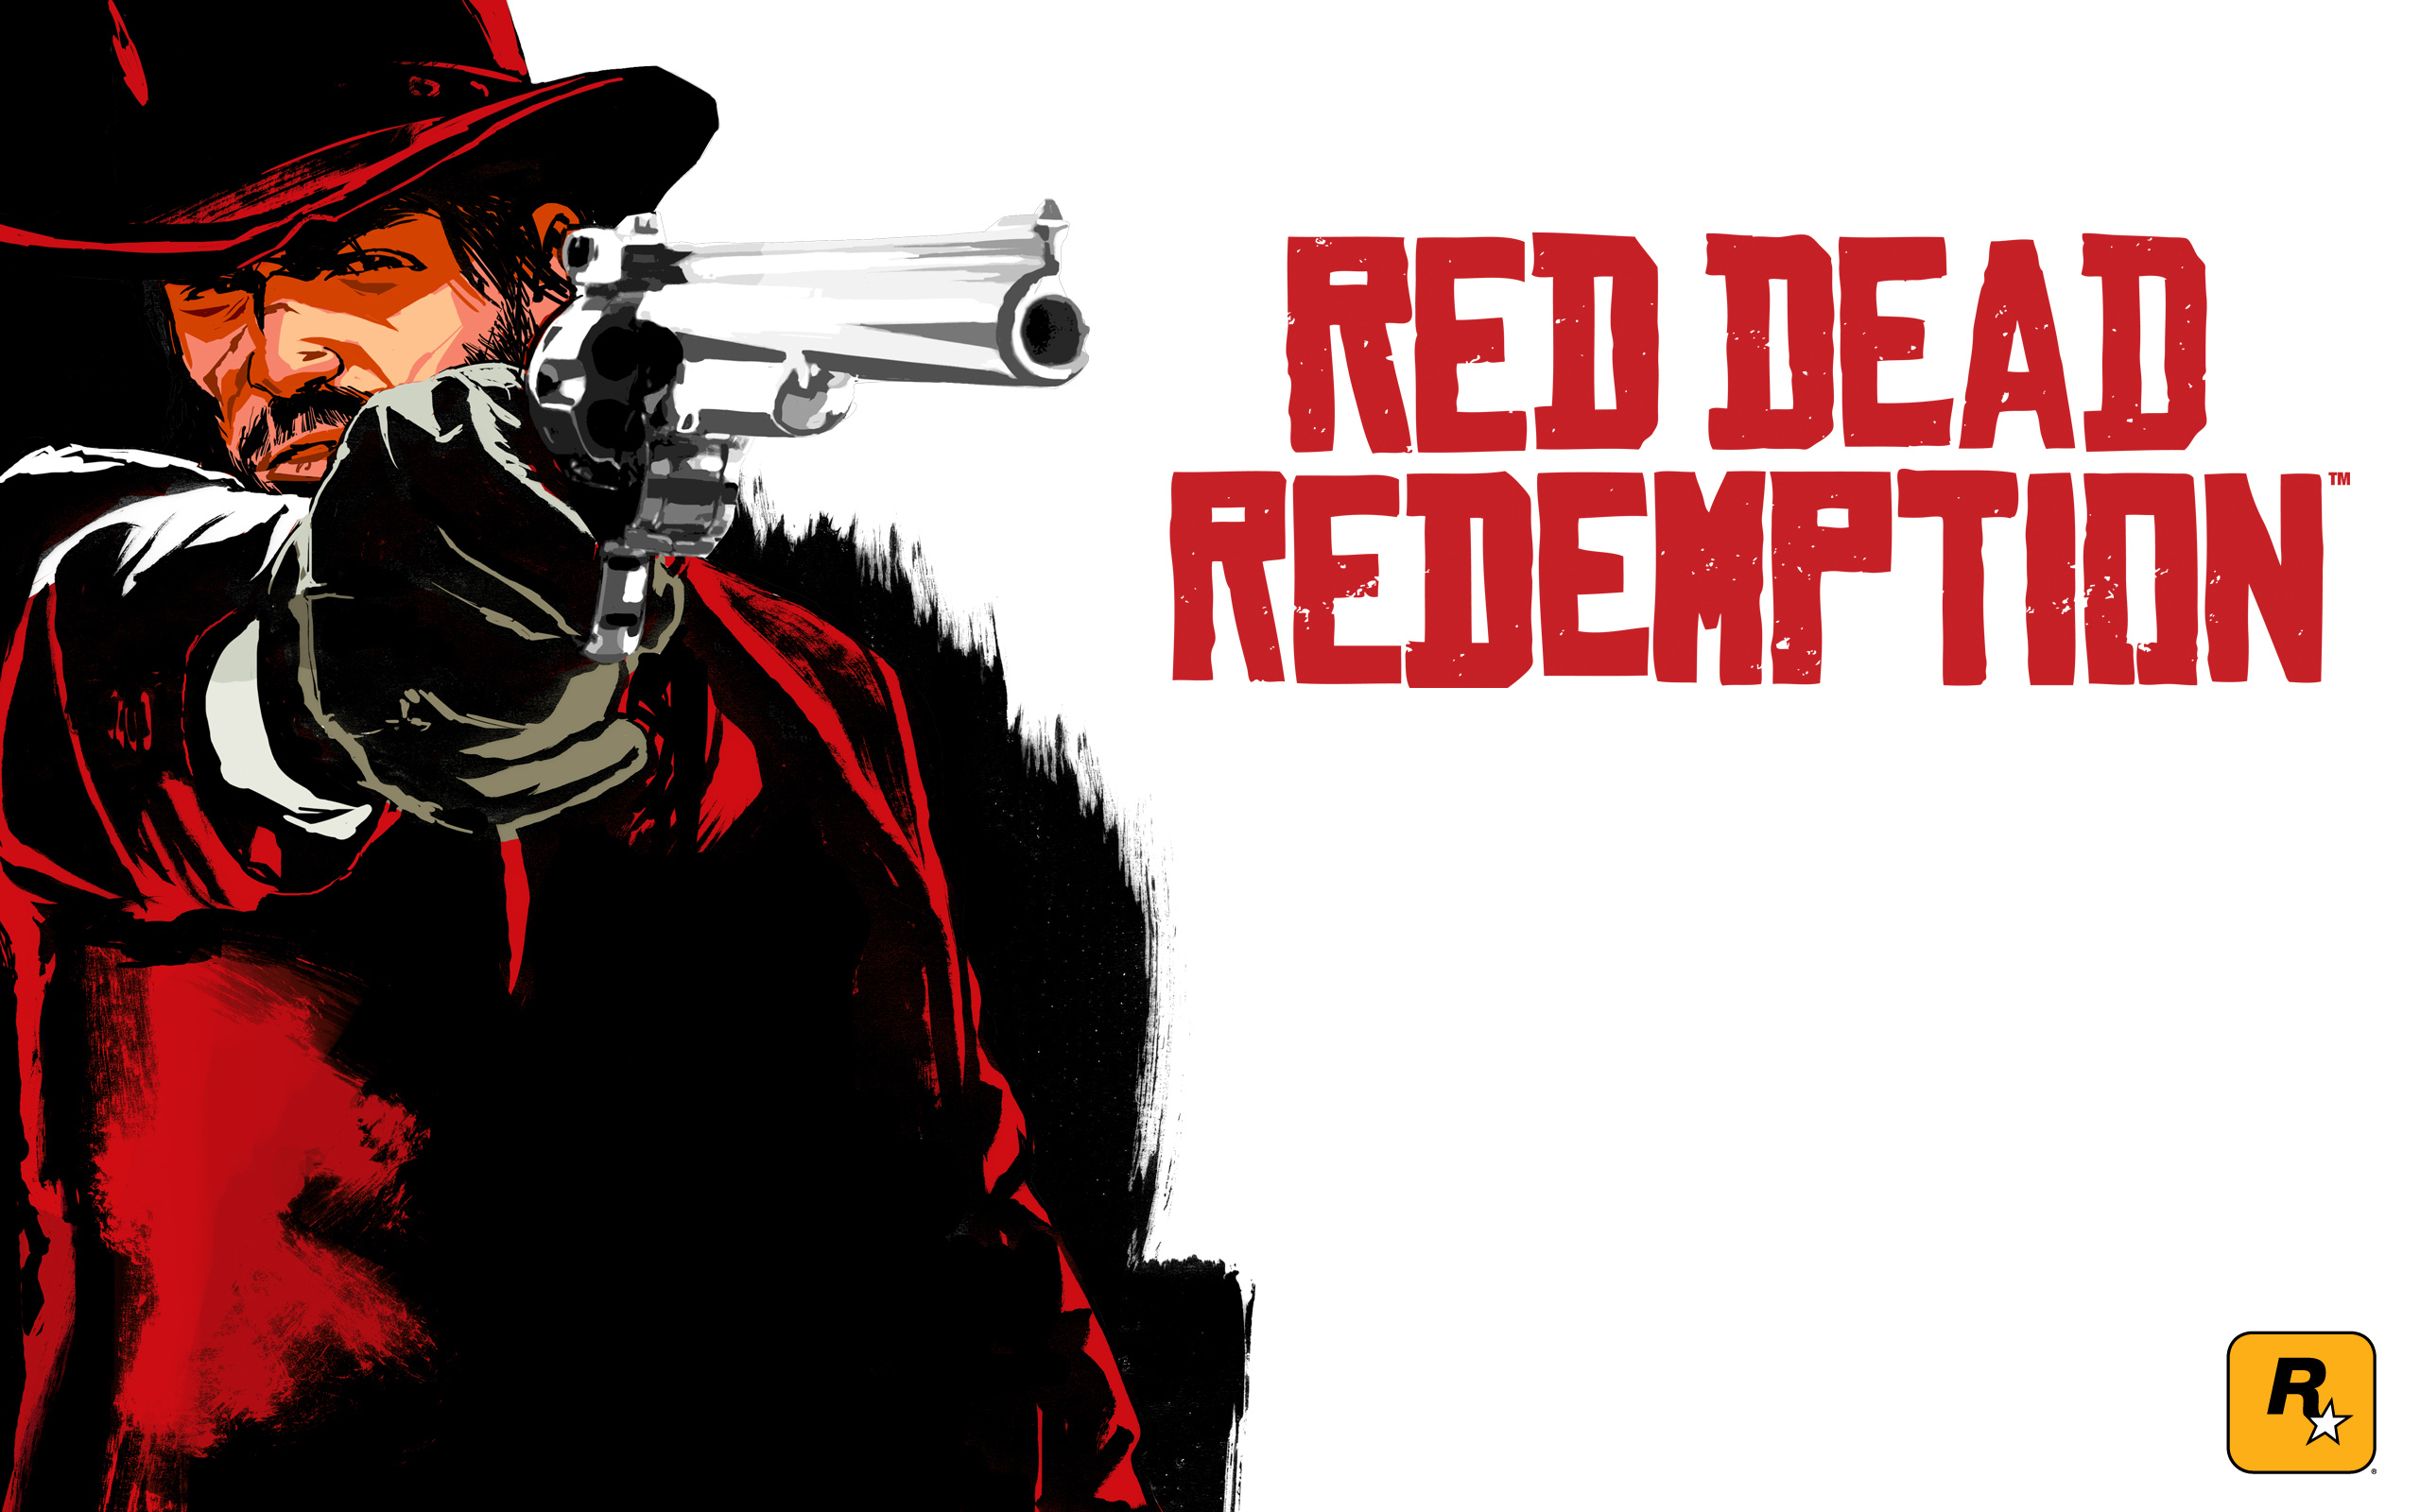 Обои на телефон ковбой. Red Dead Redemption 2010. Red Dead Redemption Red Dead Redemption. Red Dead Redemption Wallpaper. Red Dead Redemption обои 1920 1080.